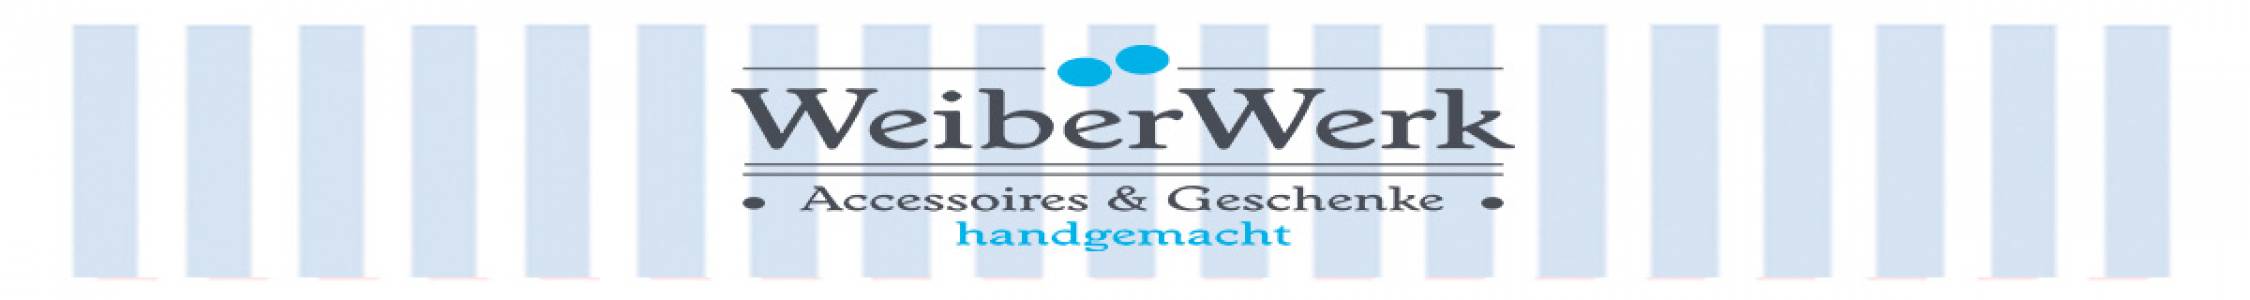 WeiberWerk Shop | kasuwa.de